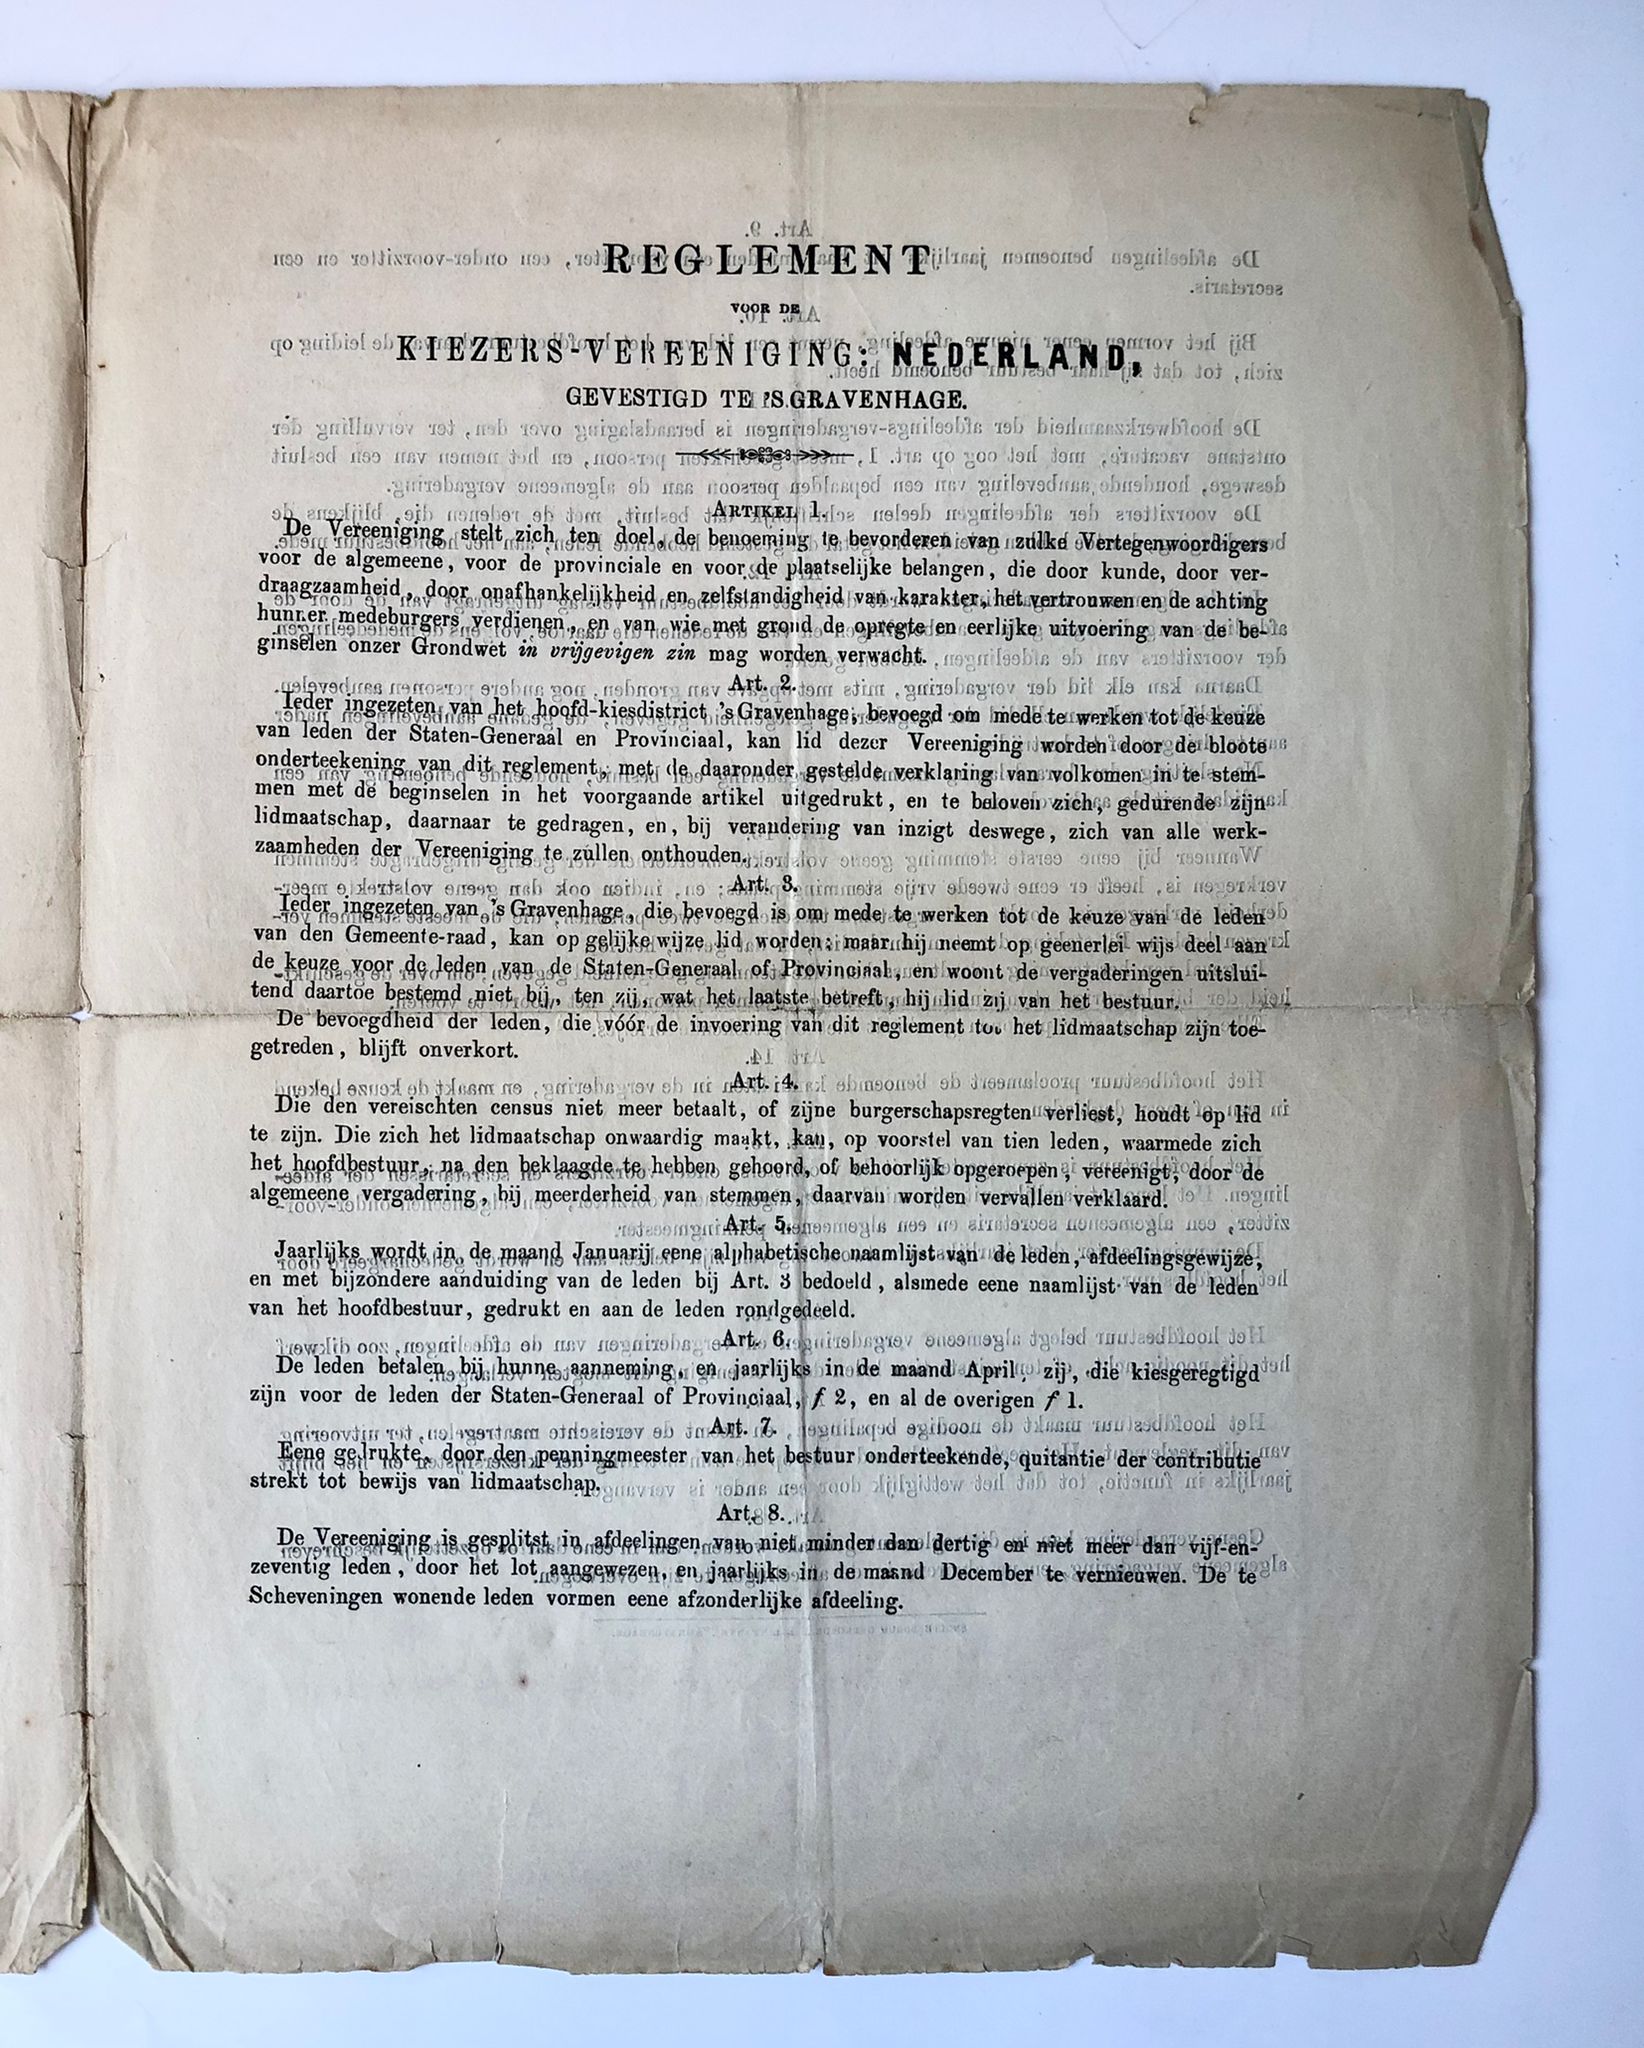 [Political elections, The Hague, Kiesvereniging Nederlands, 1861] Brochure 'Aan de kiezers te 's-Gravenhage'. 4°, 4 pp. Printed publication, 1861.